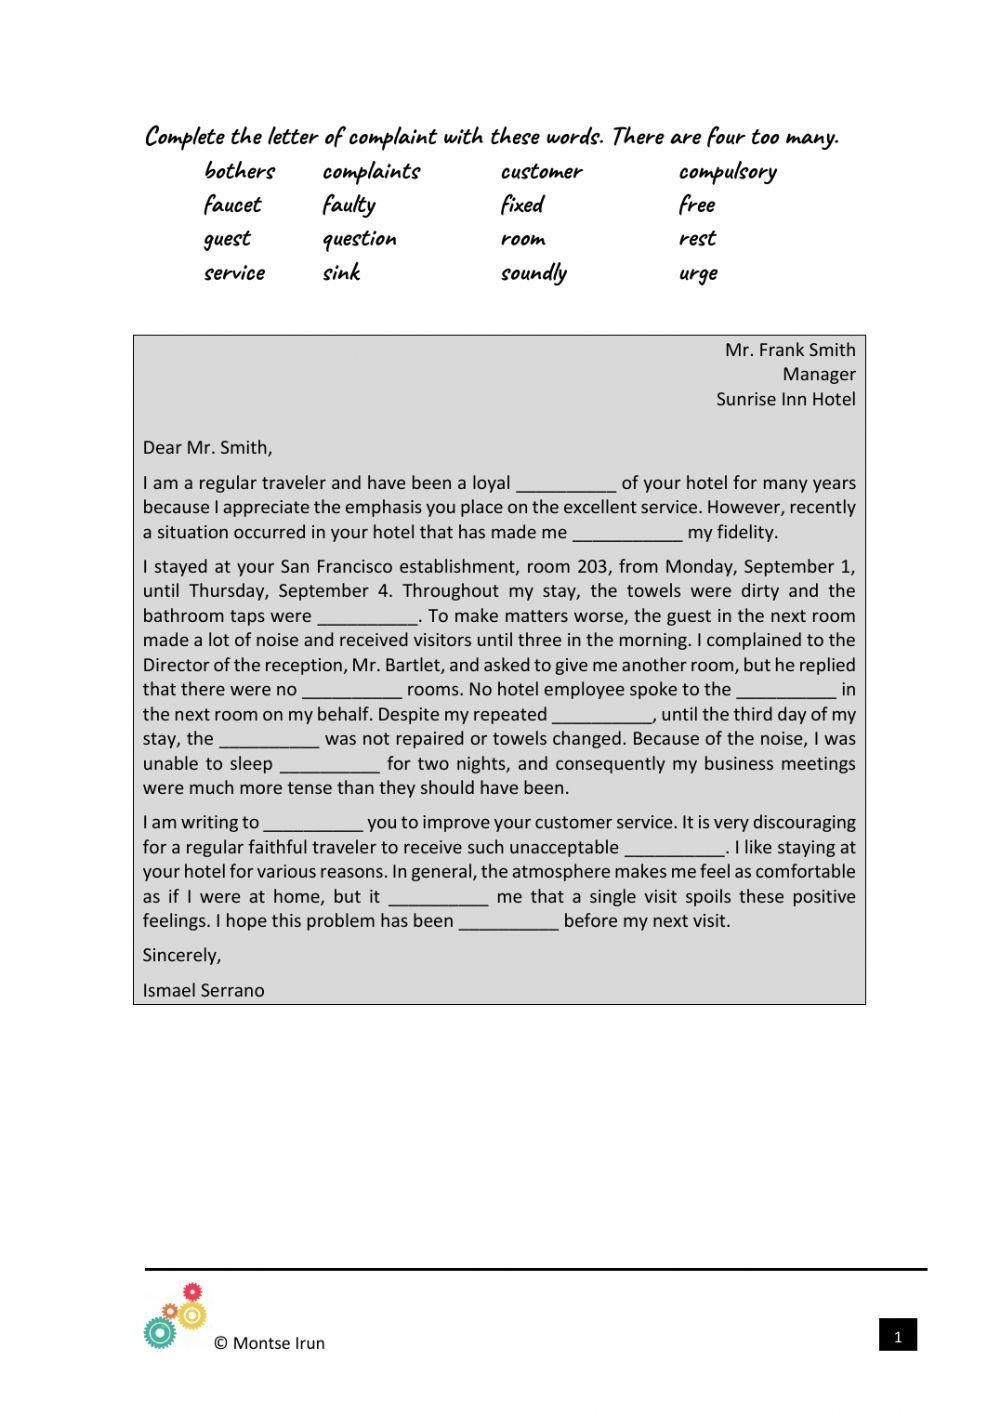 Letter of complaint